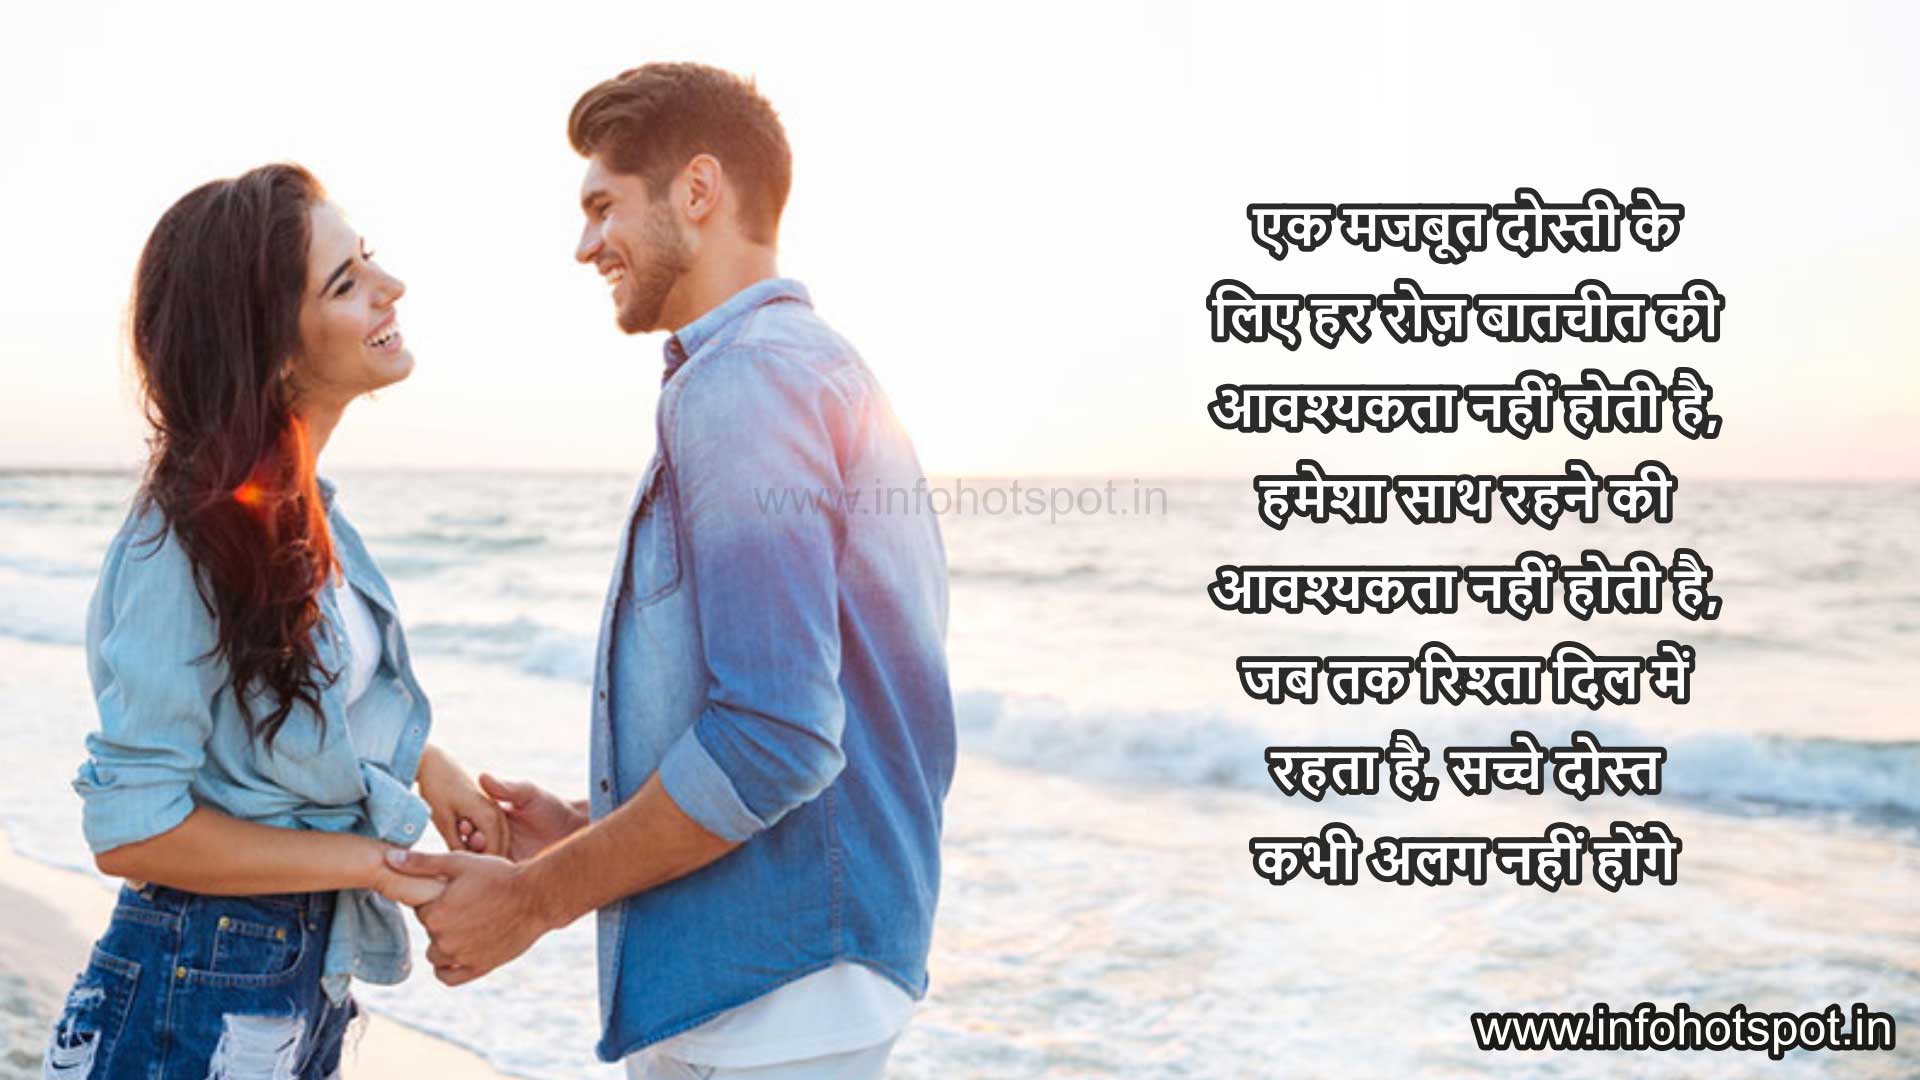 Friendship-Quotes-7-Hindi